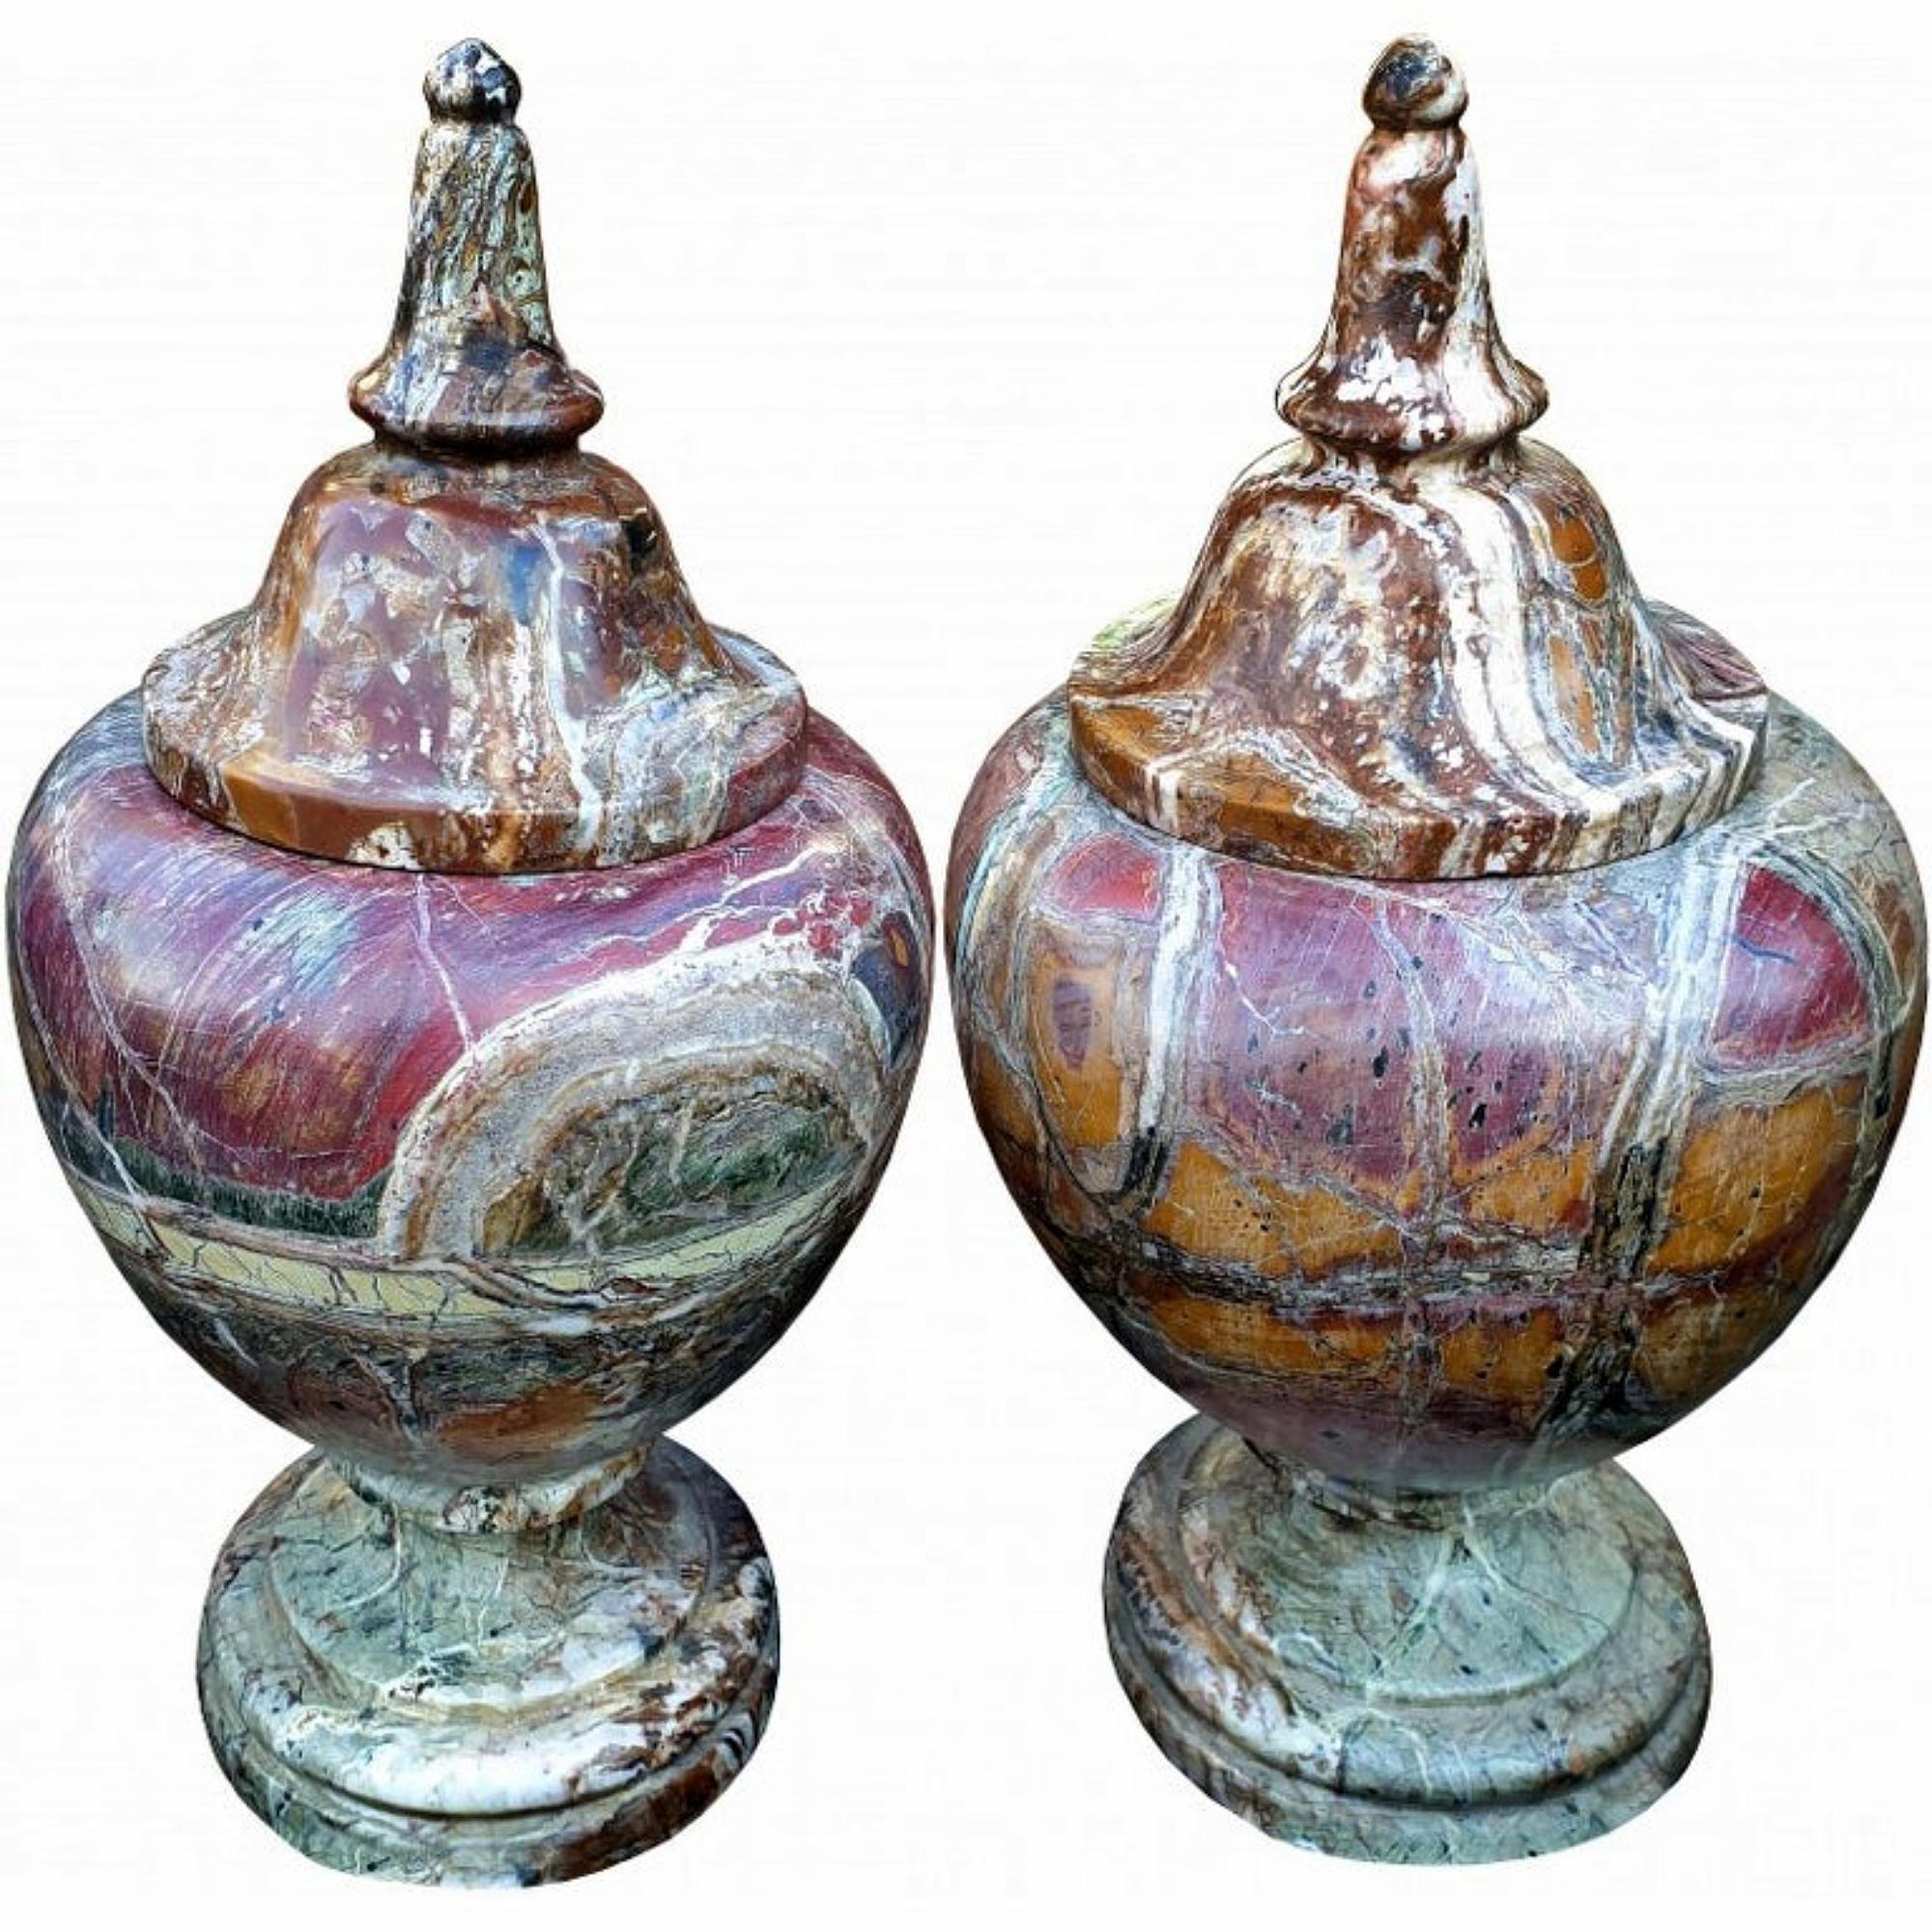 Amazing pair of turned vases in Italian diaspro rosso marble early 20th century.
Measures : height 32 cm.
diameter 16 cm.
weight 20 kg.
Artist / designer / architect Lorenzo Bertozzi.
Material : Diaspro rosso marble.